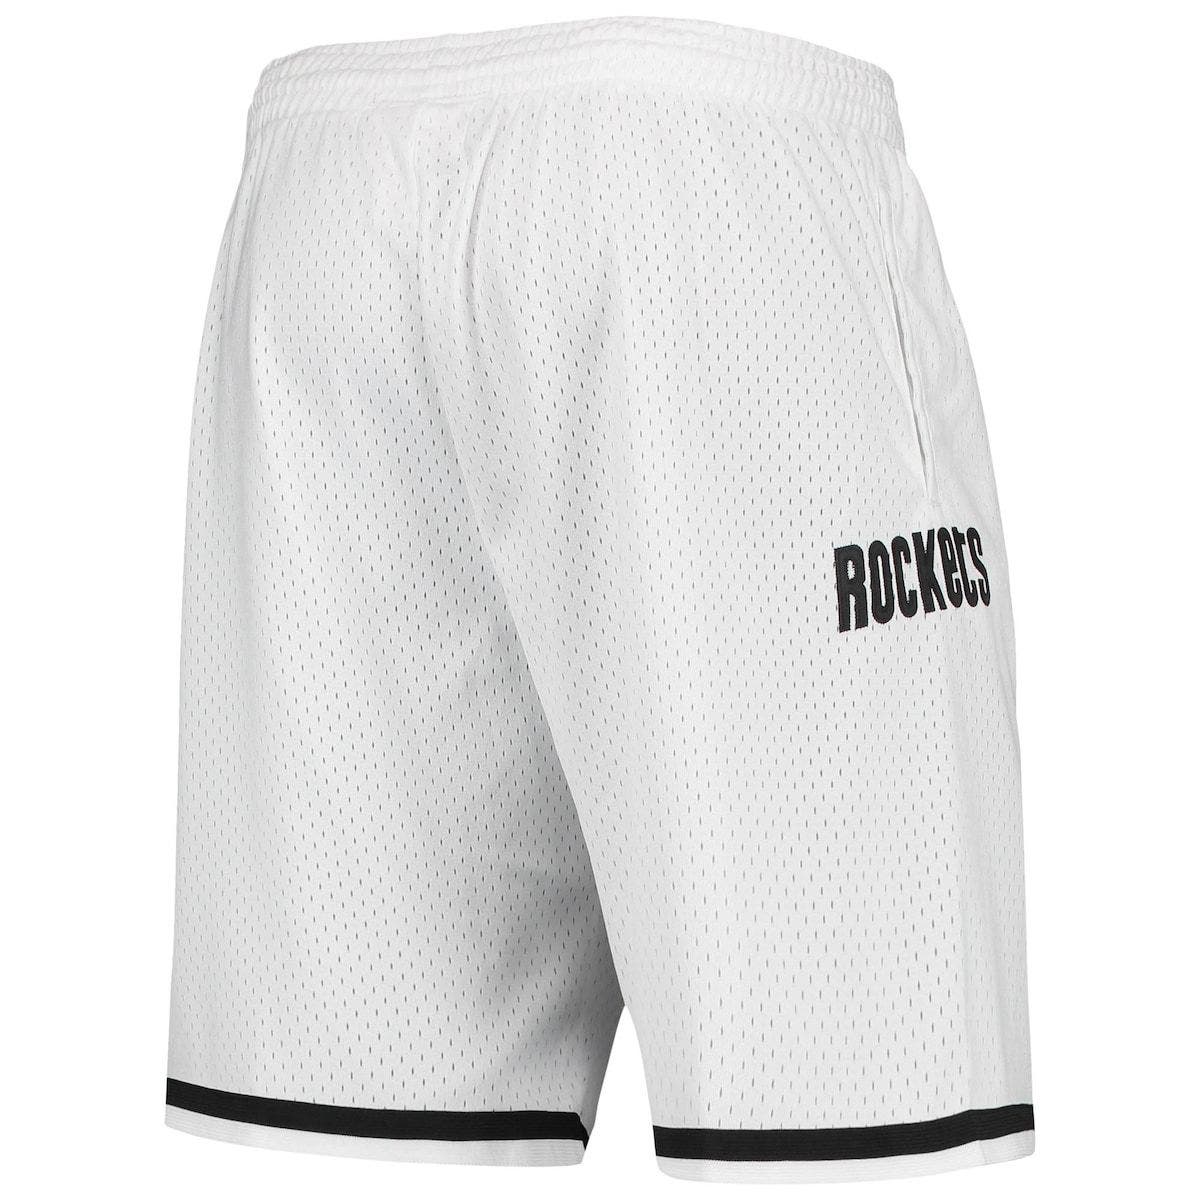 Retro Houston Rockets Stitched Basketball Sports Shorts Swingman White 